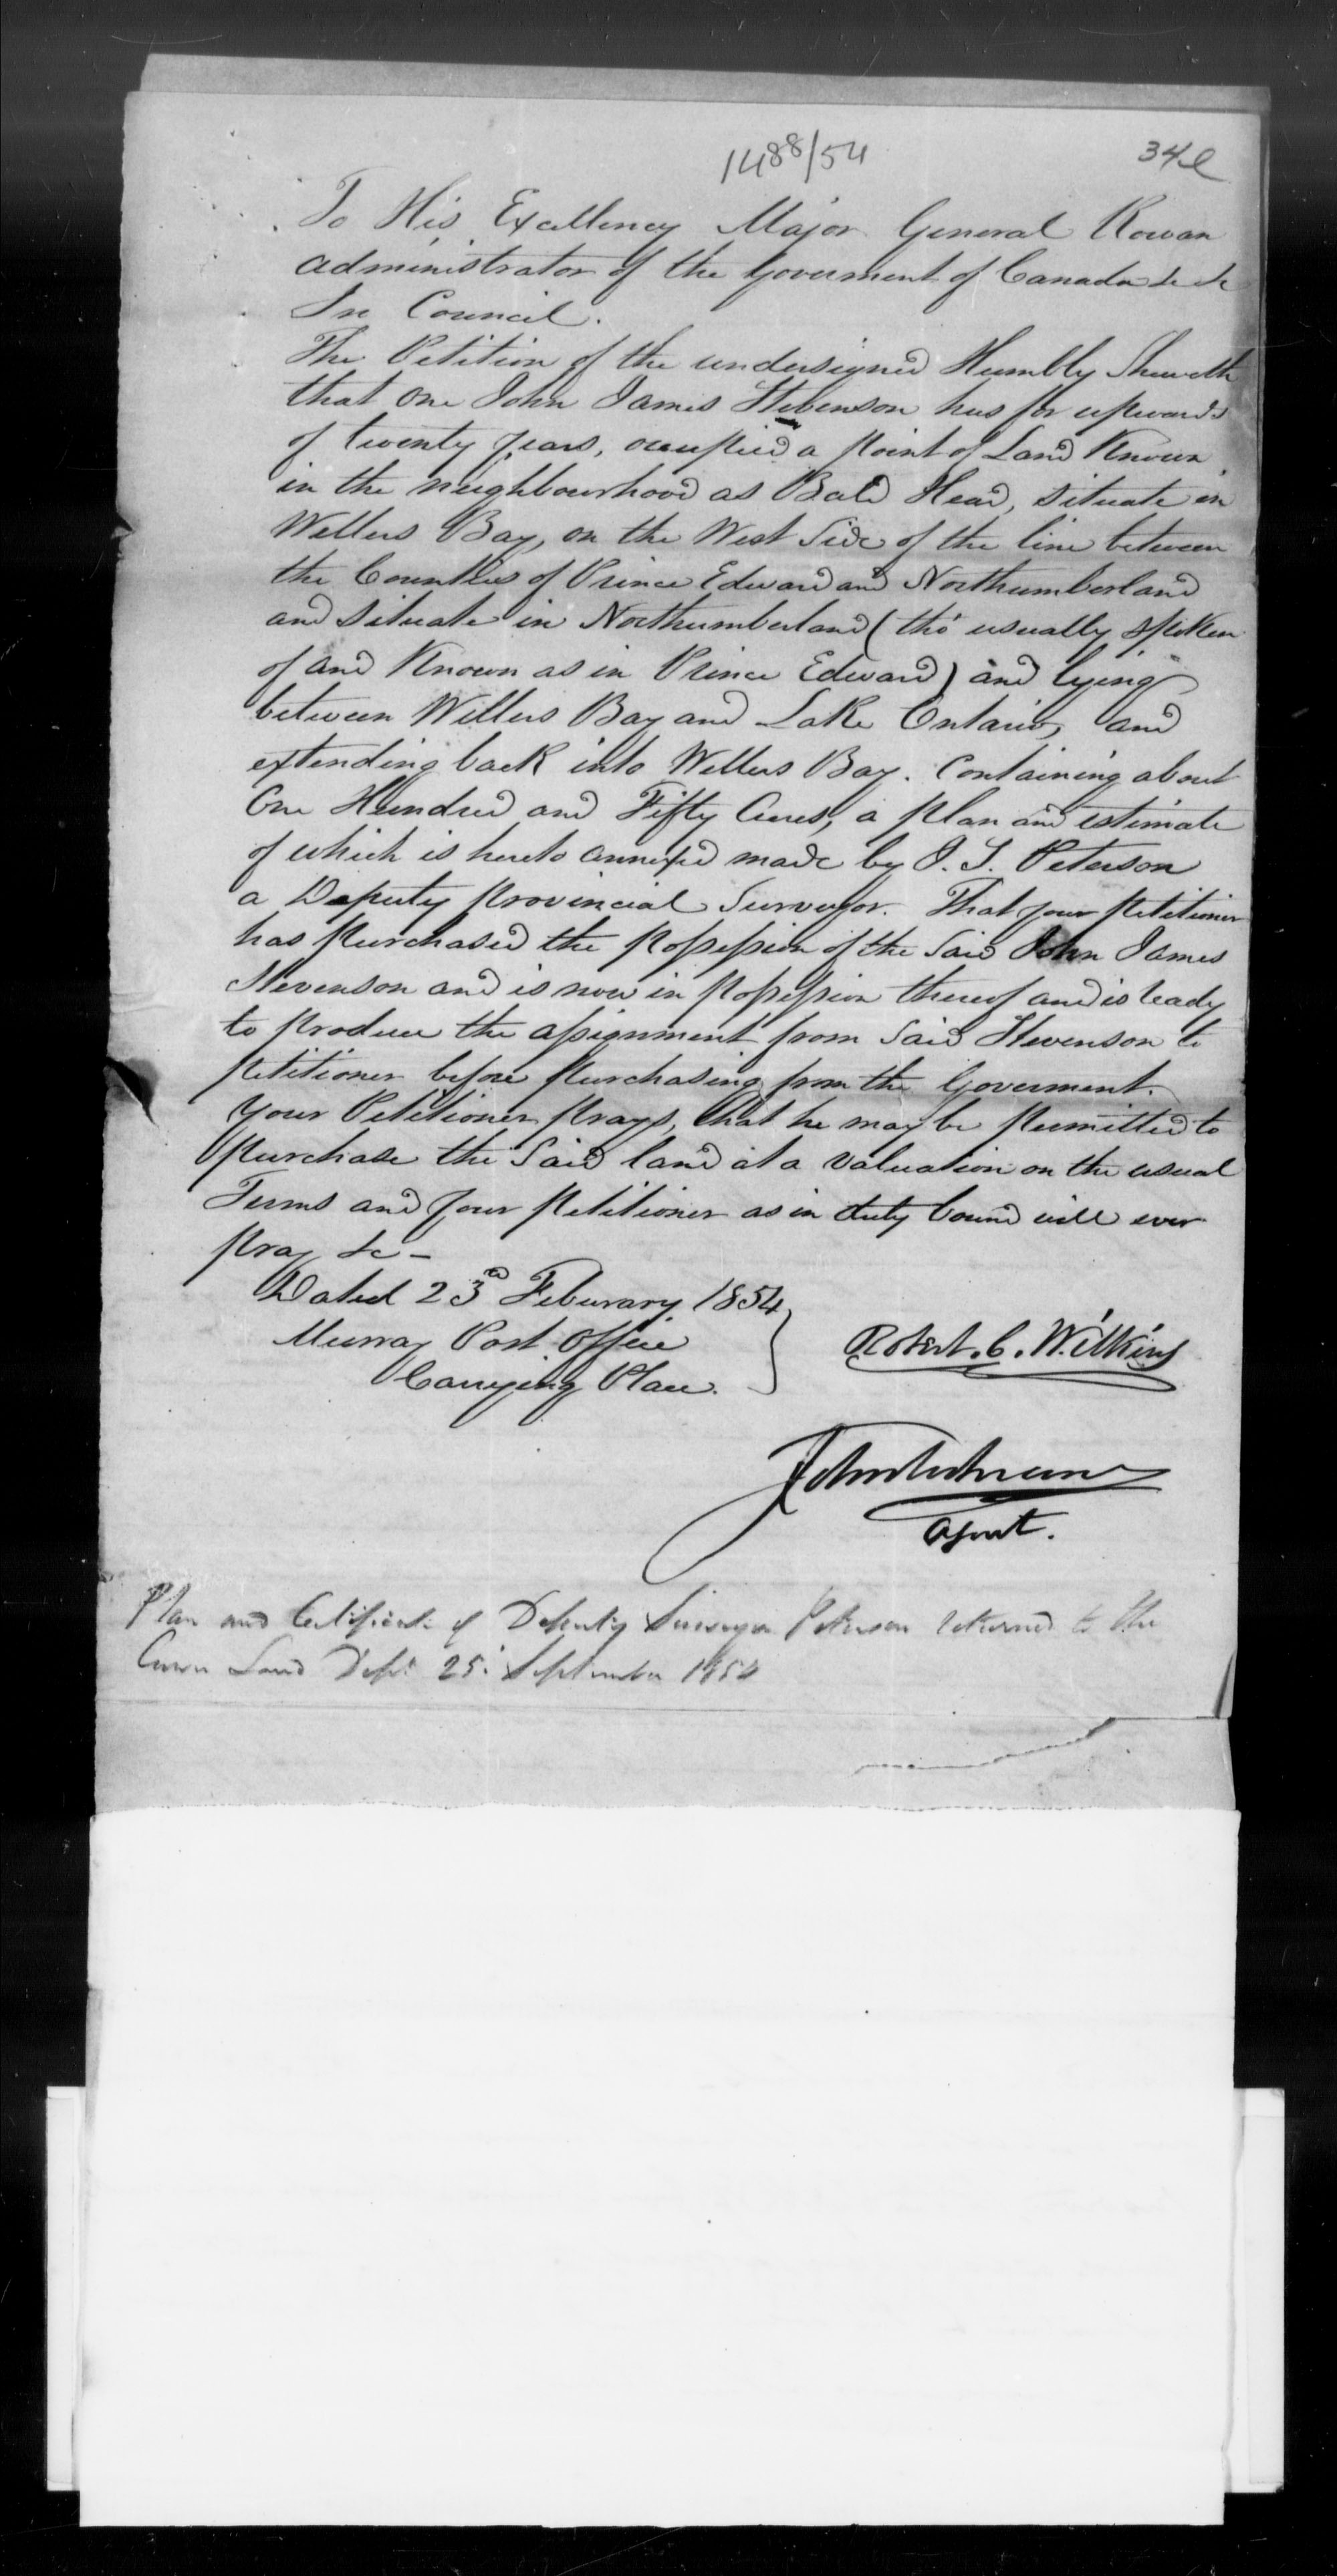 Titre : Demandes de terres du Haut-Canada (1763-1865) - N d'enregistrement Mikan : 205131 - Microforme : c-2965